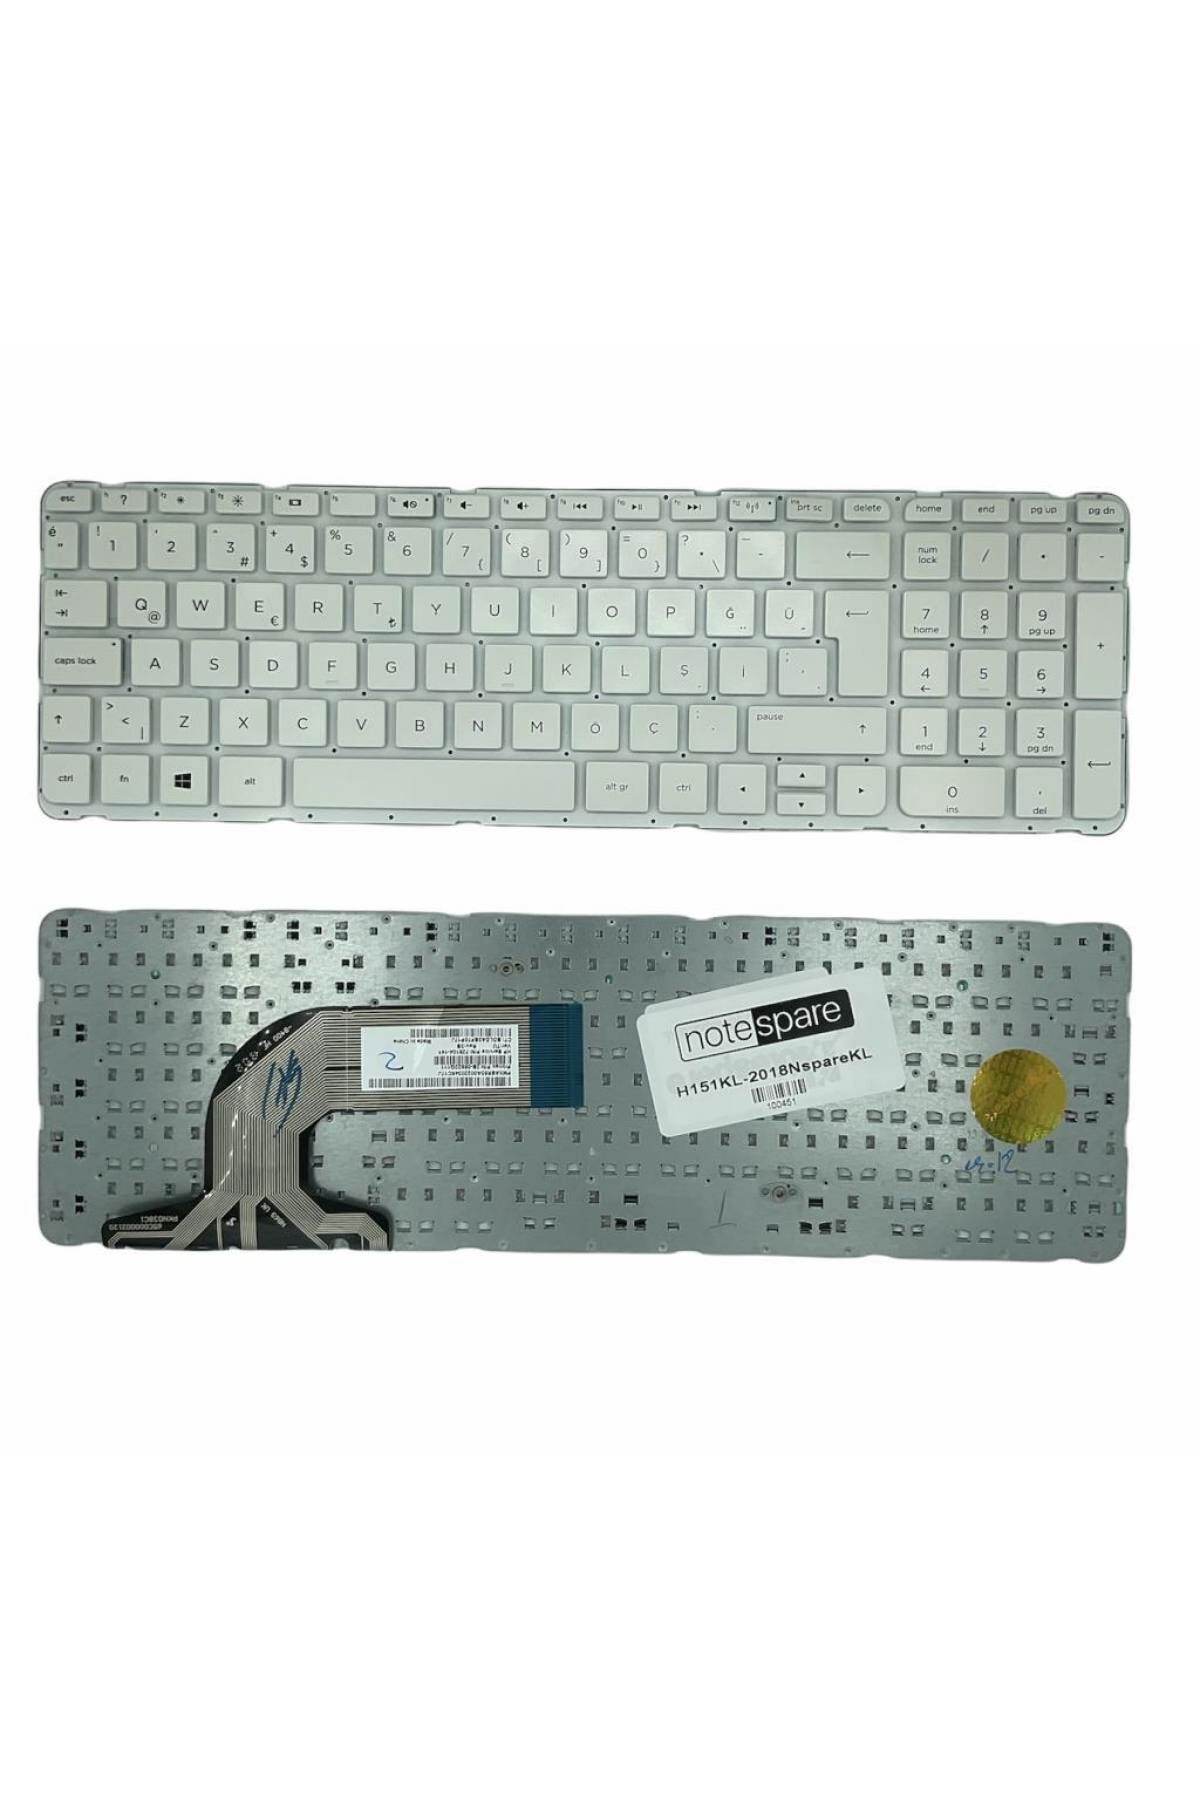 Hp ile Uyumlu 250 G3 (J0X92Ea), 250 G3 (J4T54EA), 250 G3 (J4T57EA) Notebook Klavye Beyaz TR